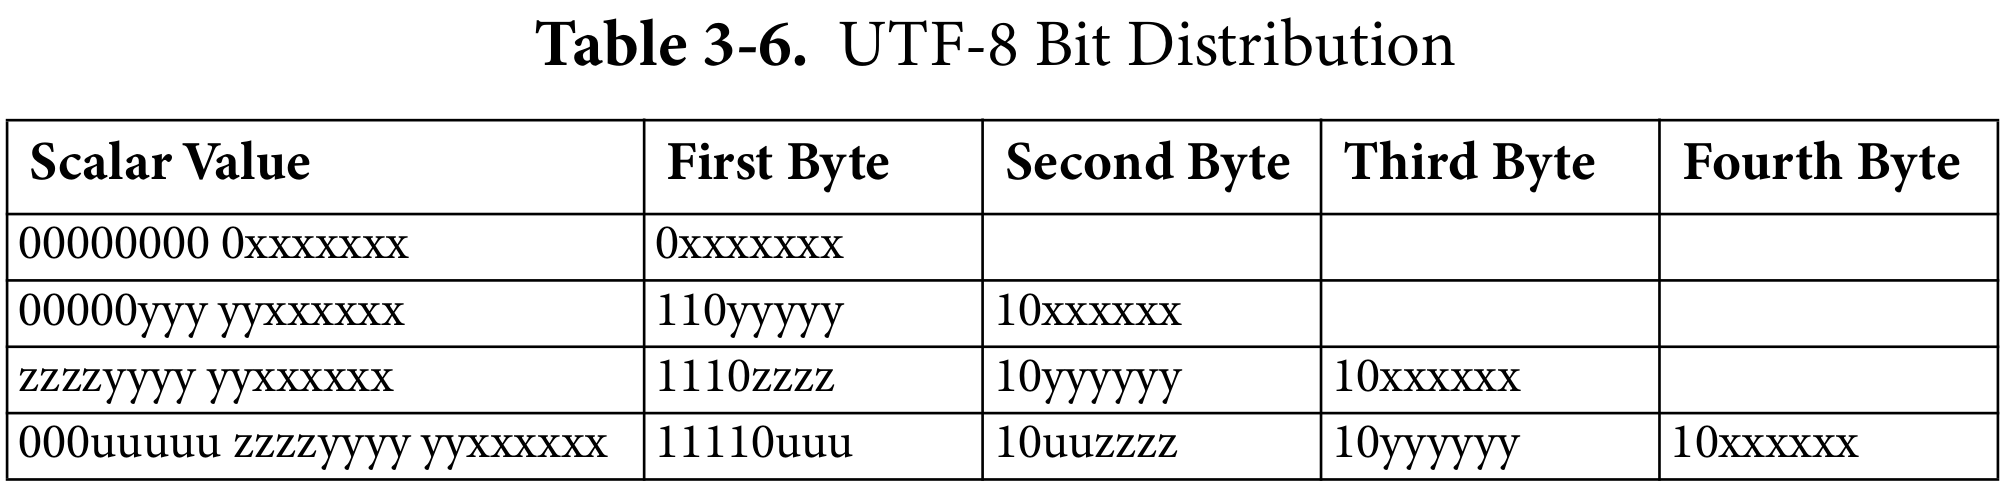 Table 3-6 of the Unicode standard, visualisation of the UTF-8 encoding form